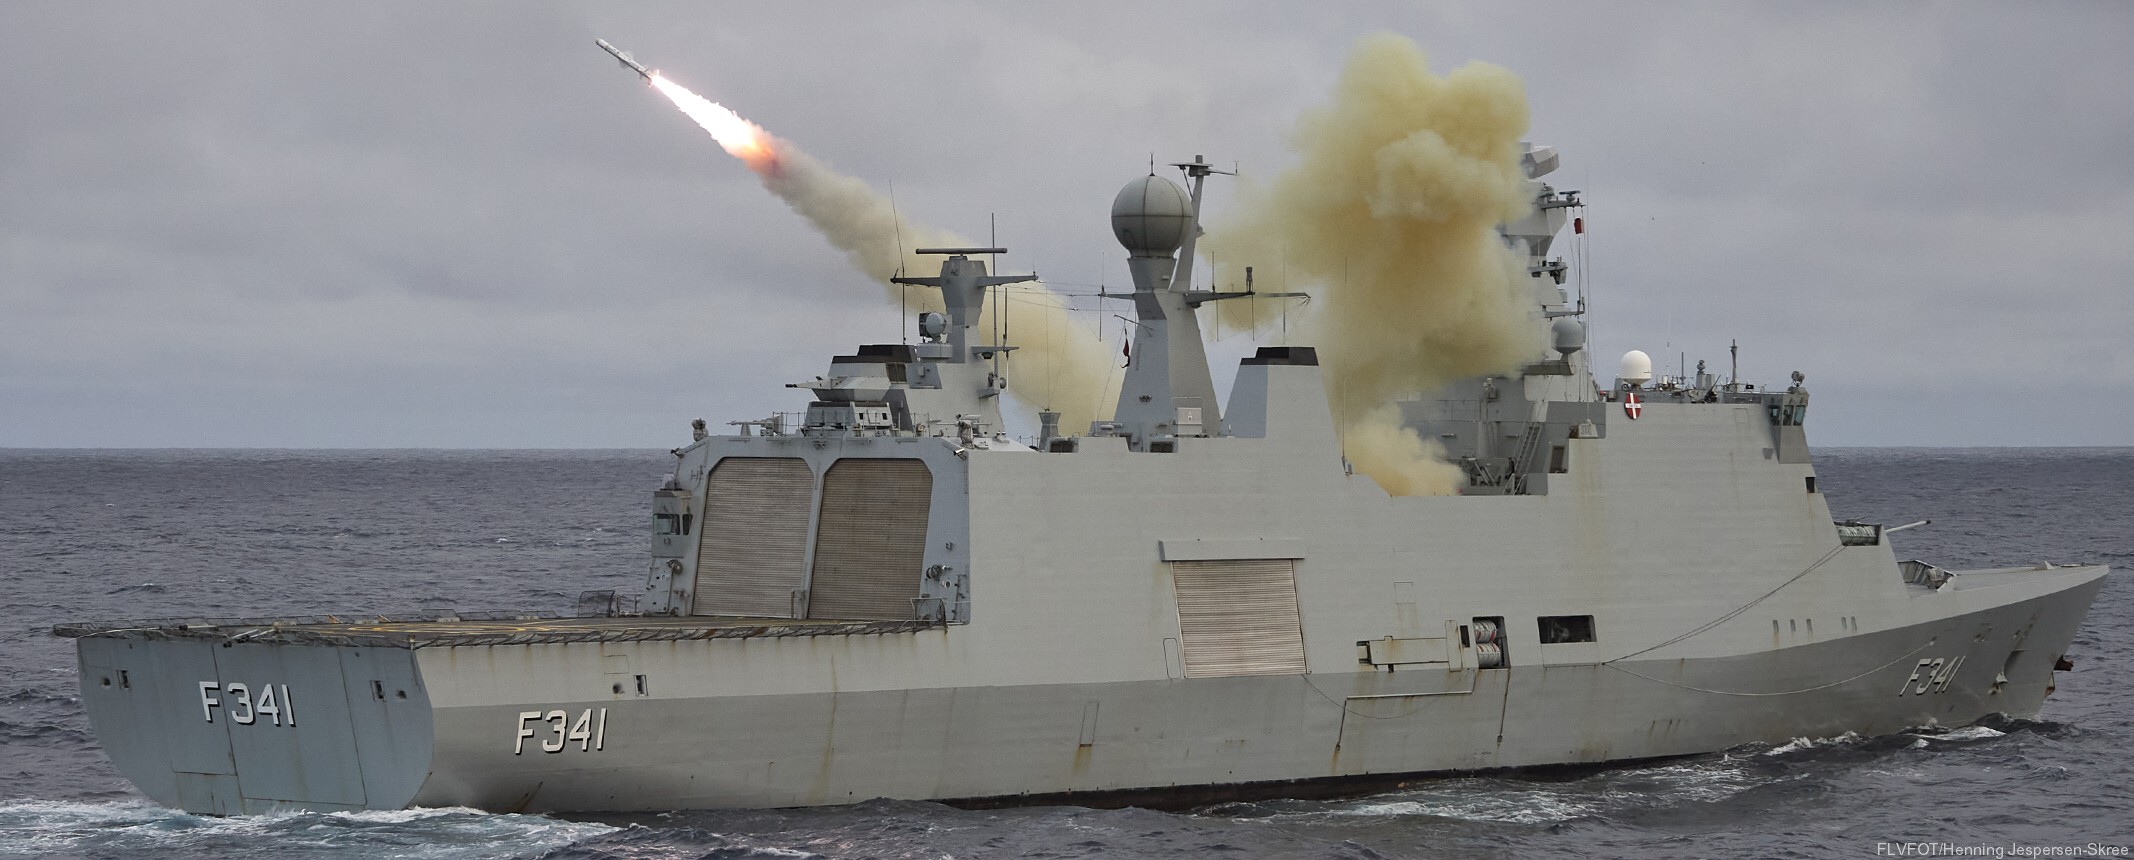 f-341 hdms absalon frigate royal danish navy søværnet forsvaret rgm-84 harpoon ssm 08